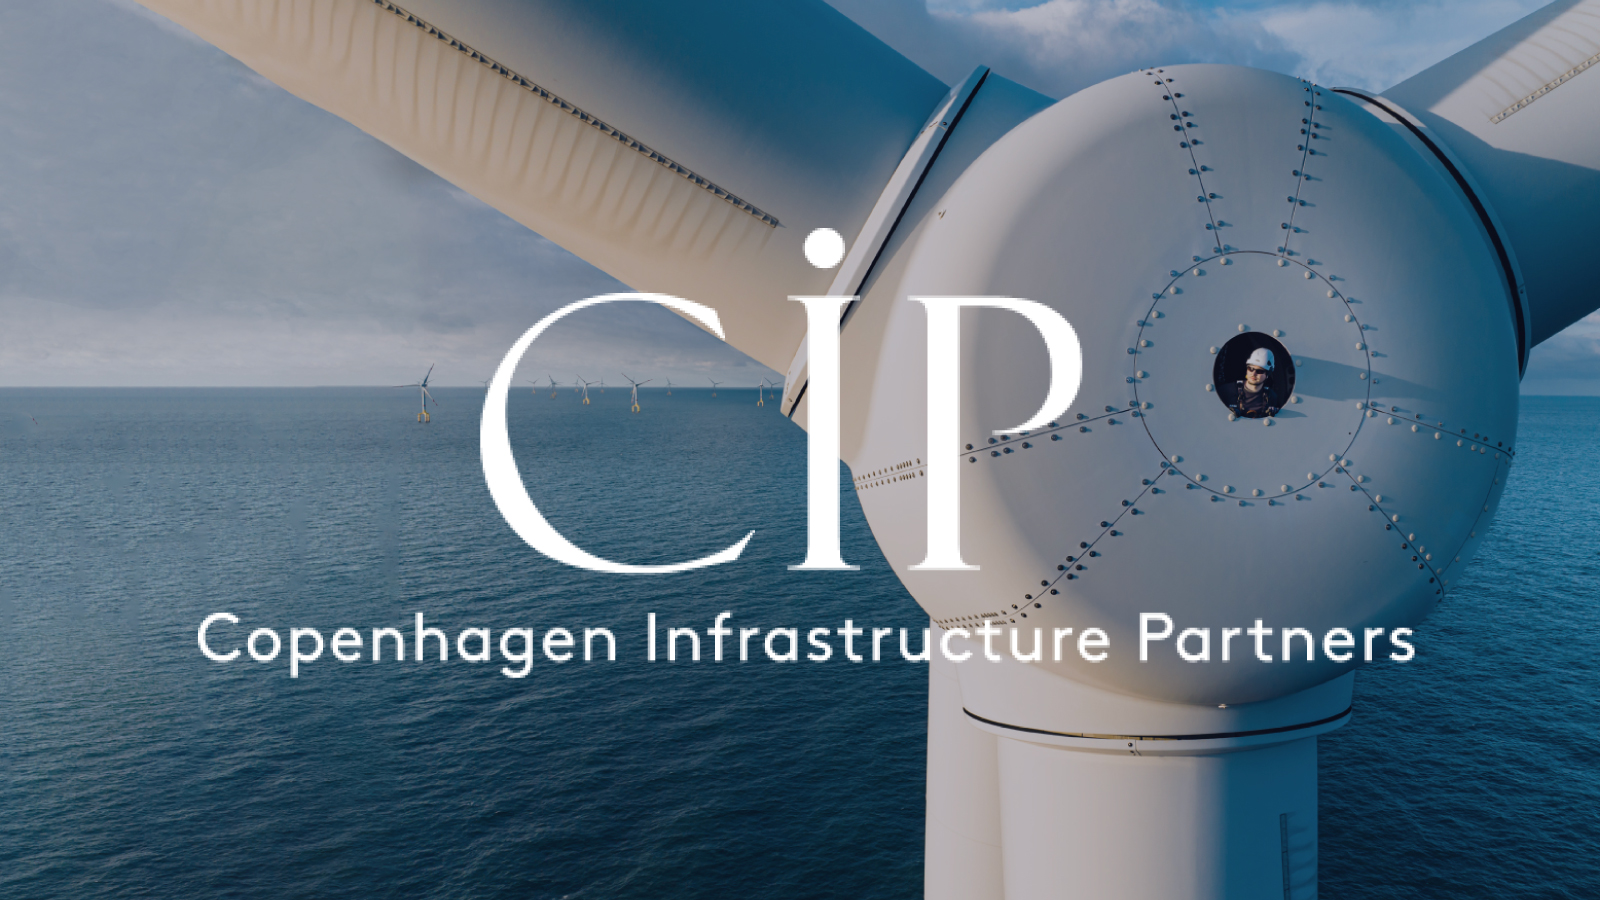 Graphic: Wind Turbine with CIP logo overlay